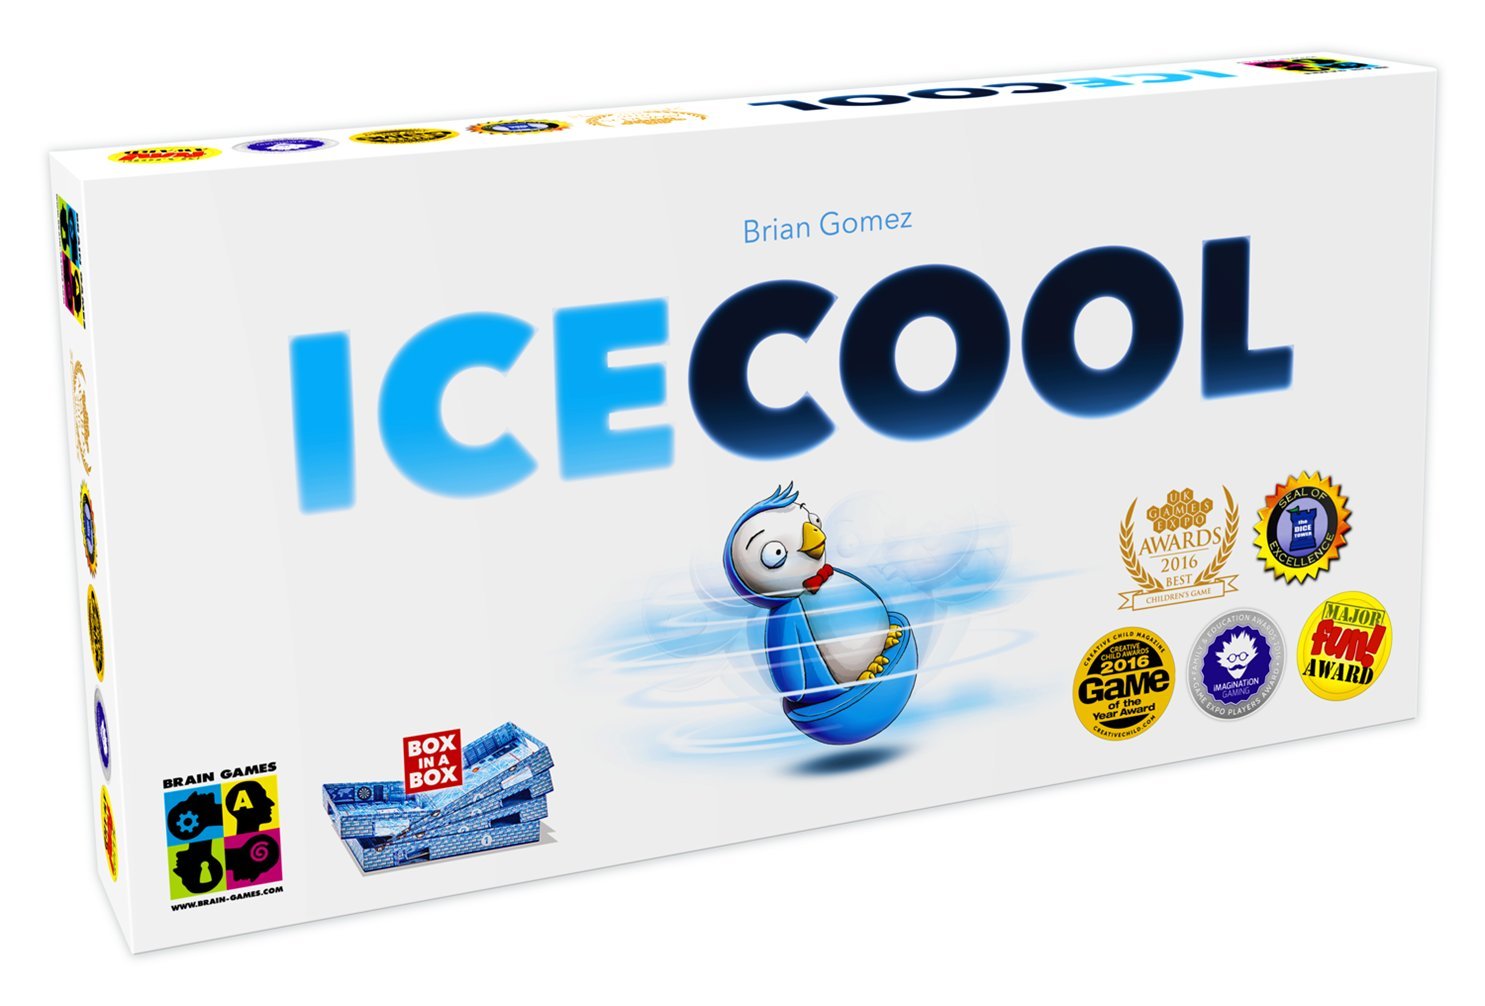 Brain Games - ICECOOL Award-Winning Family Board Game